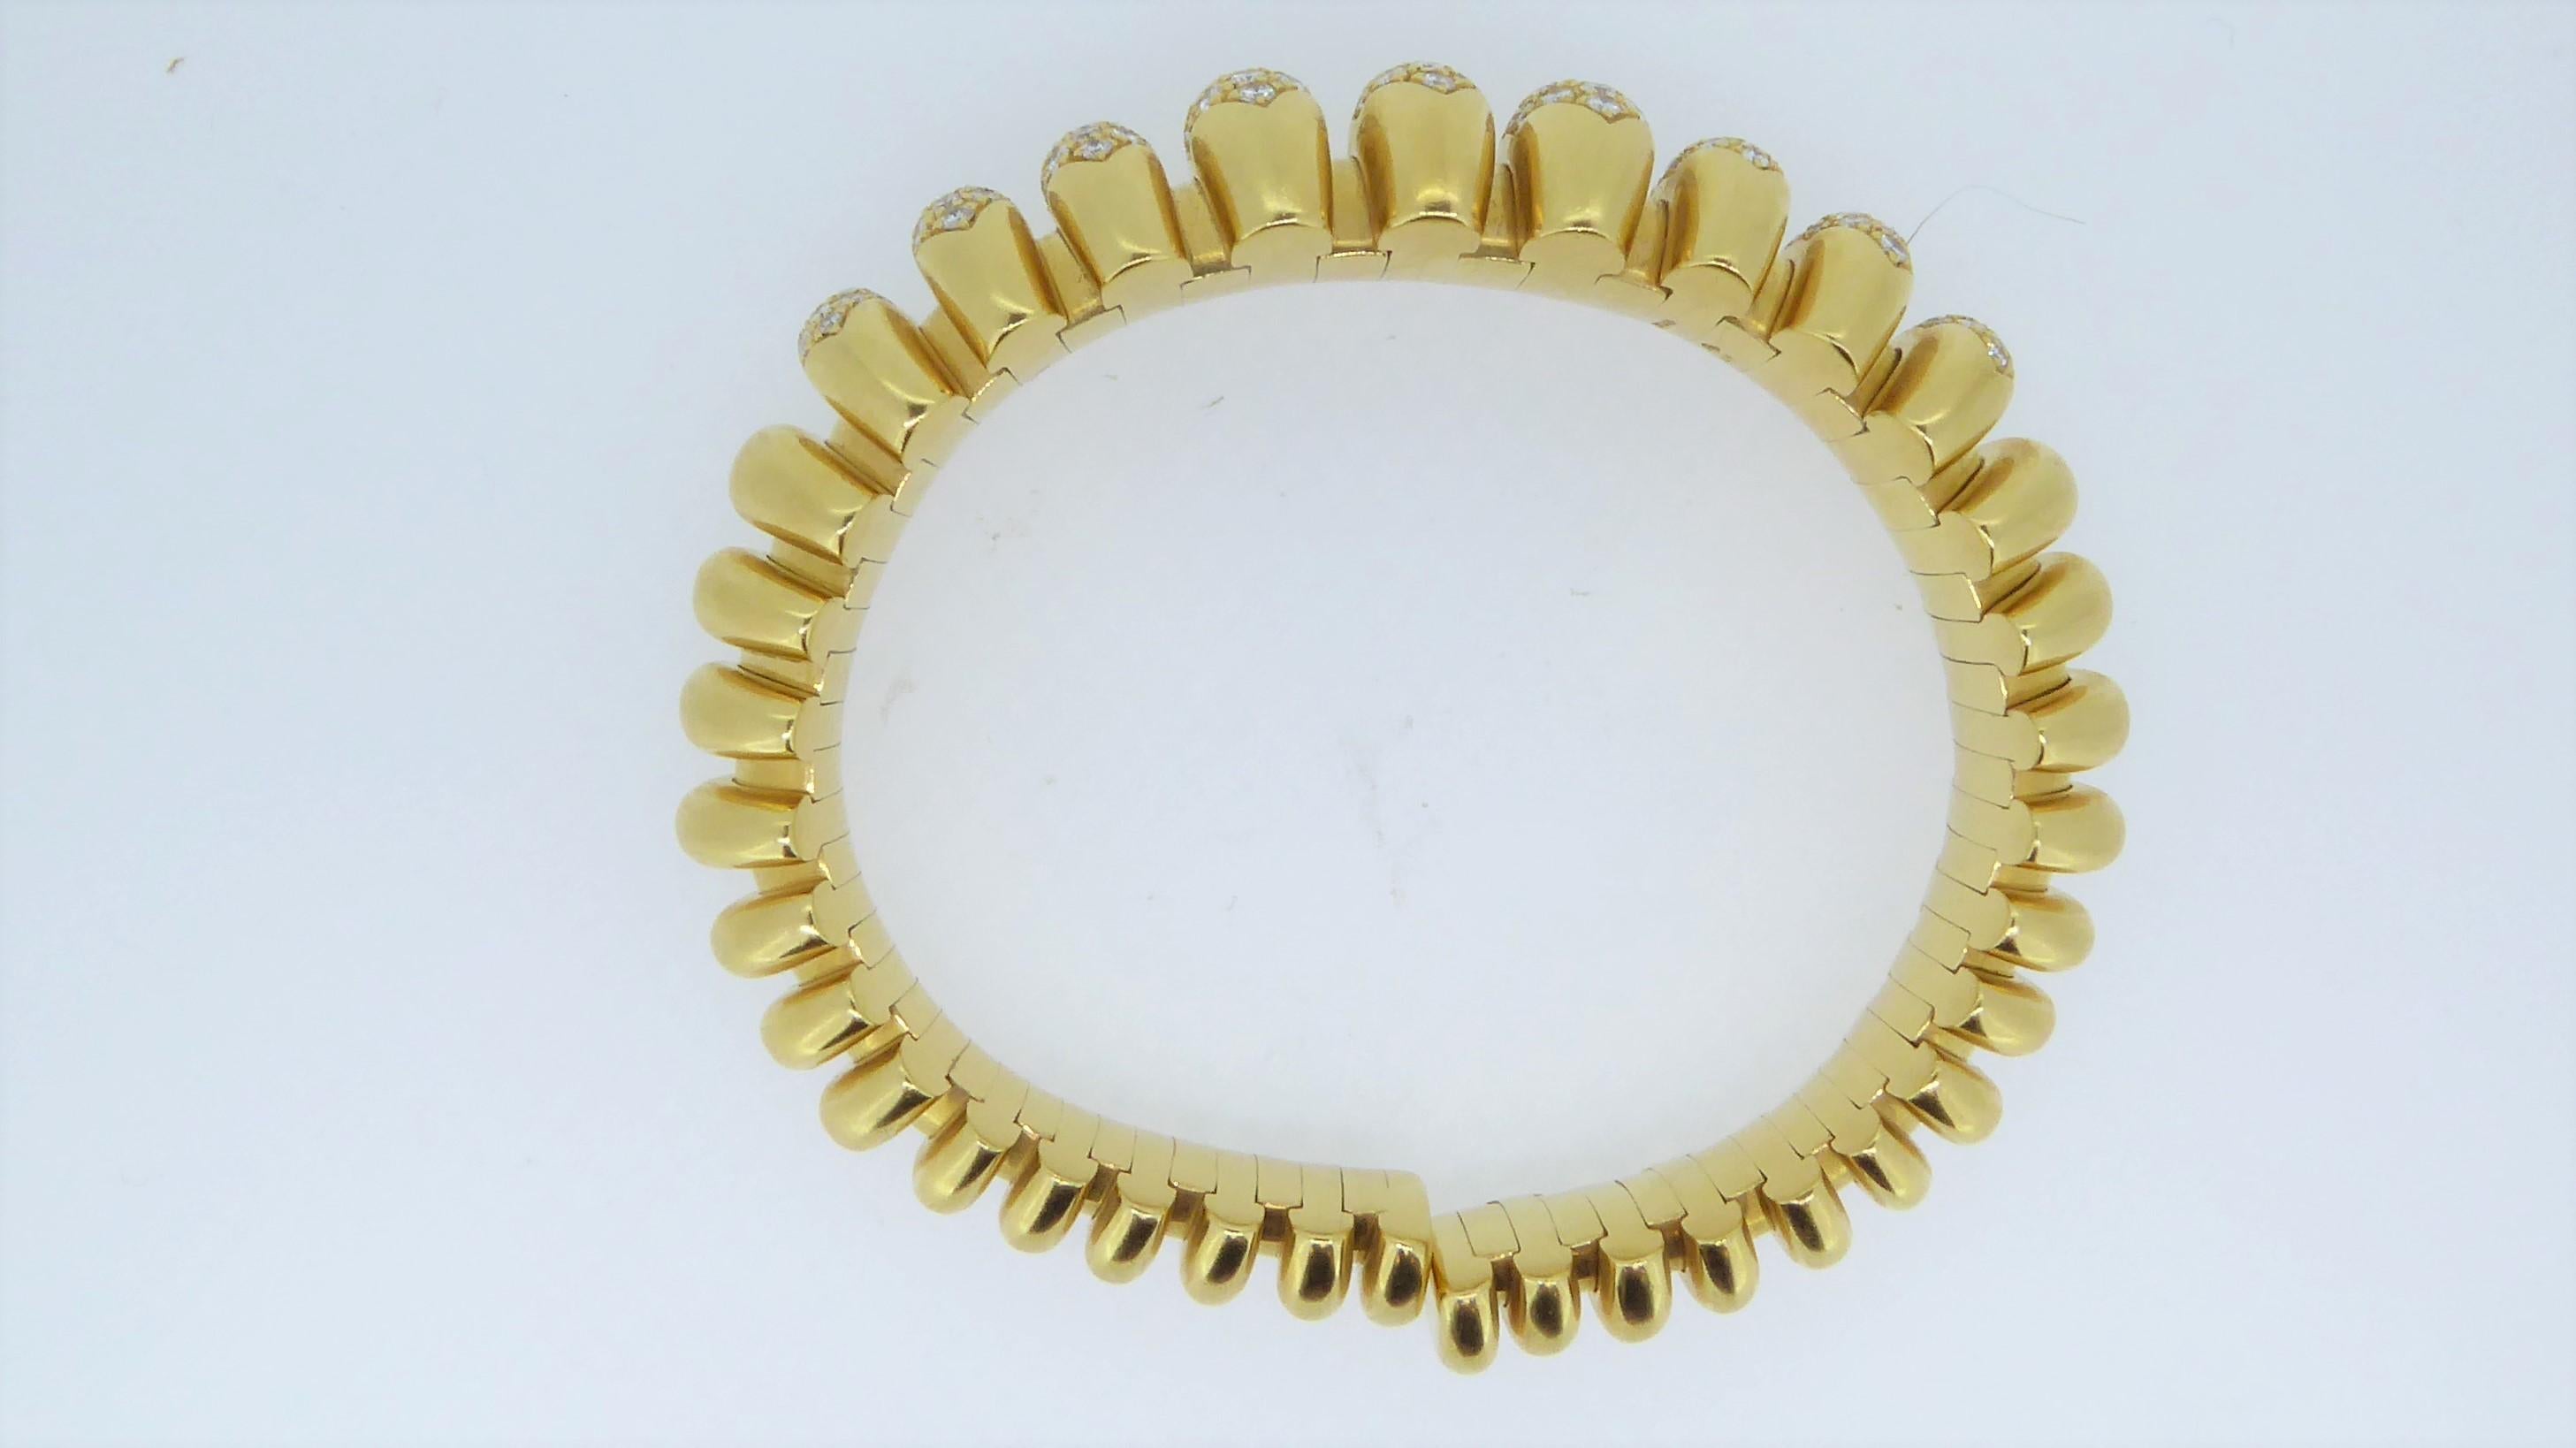 A Bulgari 18 Carat Yellow Gold And Diamond Celtaura bracelet bangle. Estimated 3.80cts of white diamonds. Numbered and signed 